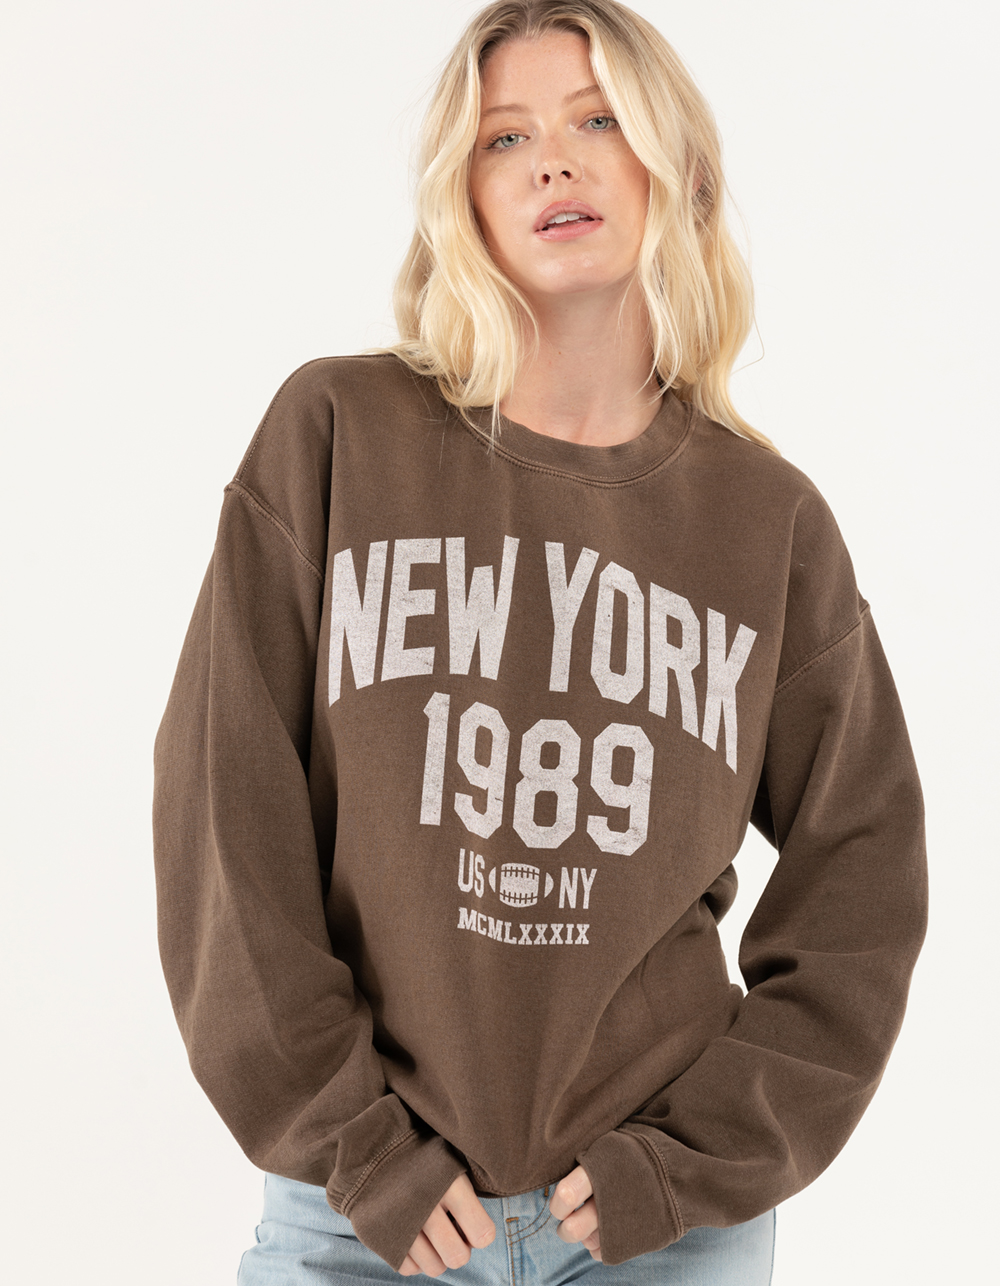 FULL TILT New York 1989 Womens Crewneck Sweatshirt